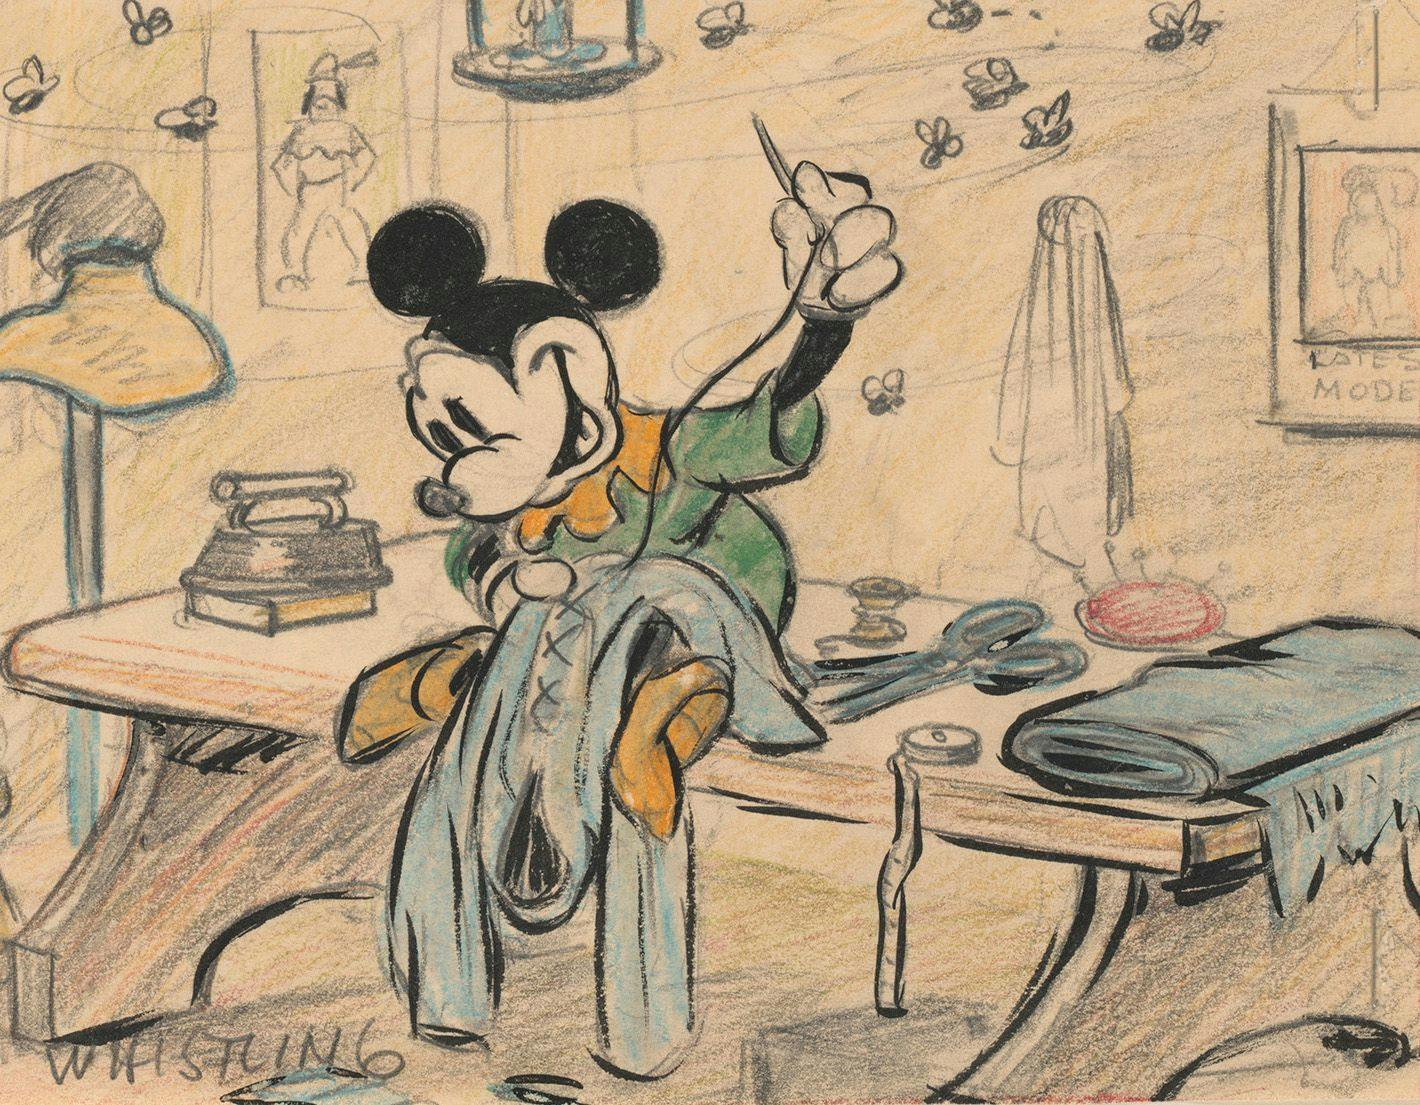 Skissbild av Musse Pigg i animerade kortfilmen Brave little tailor från 1938